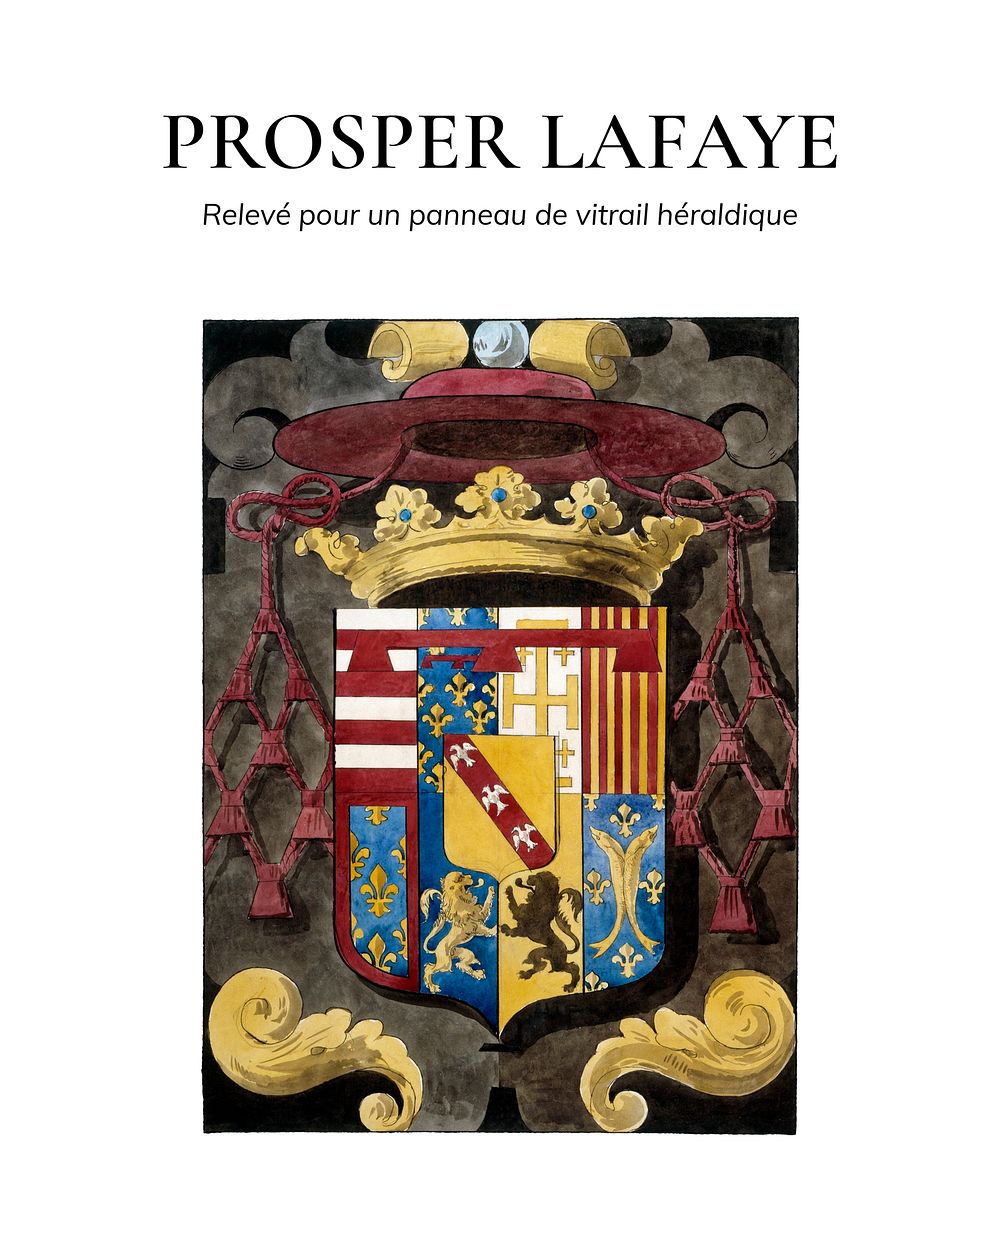 Prosper Lafaye poster art print, vintage Dessin de vitrail  painting